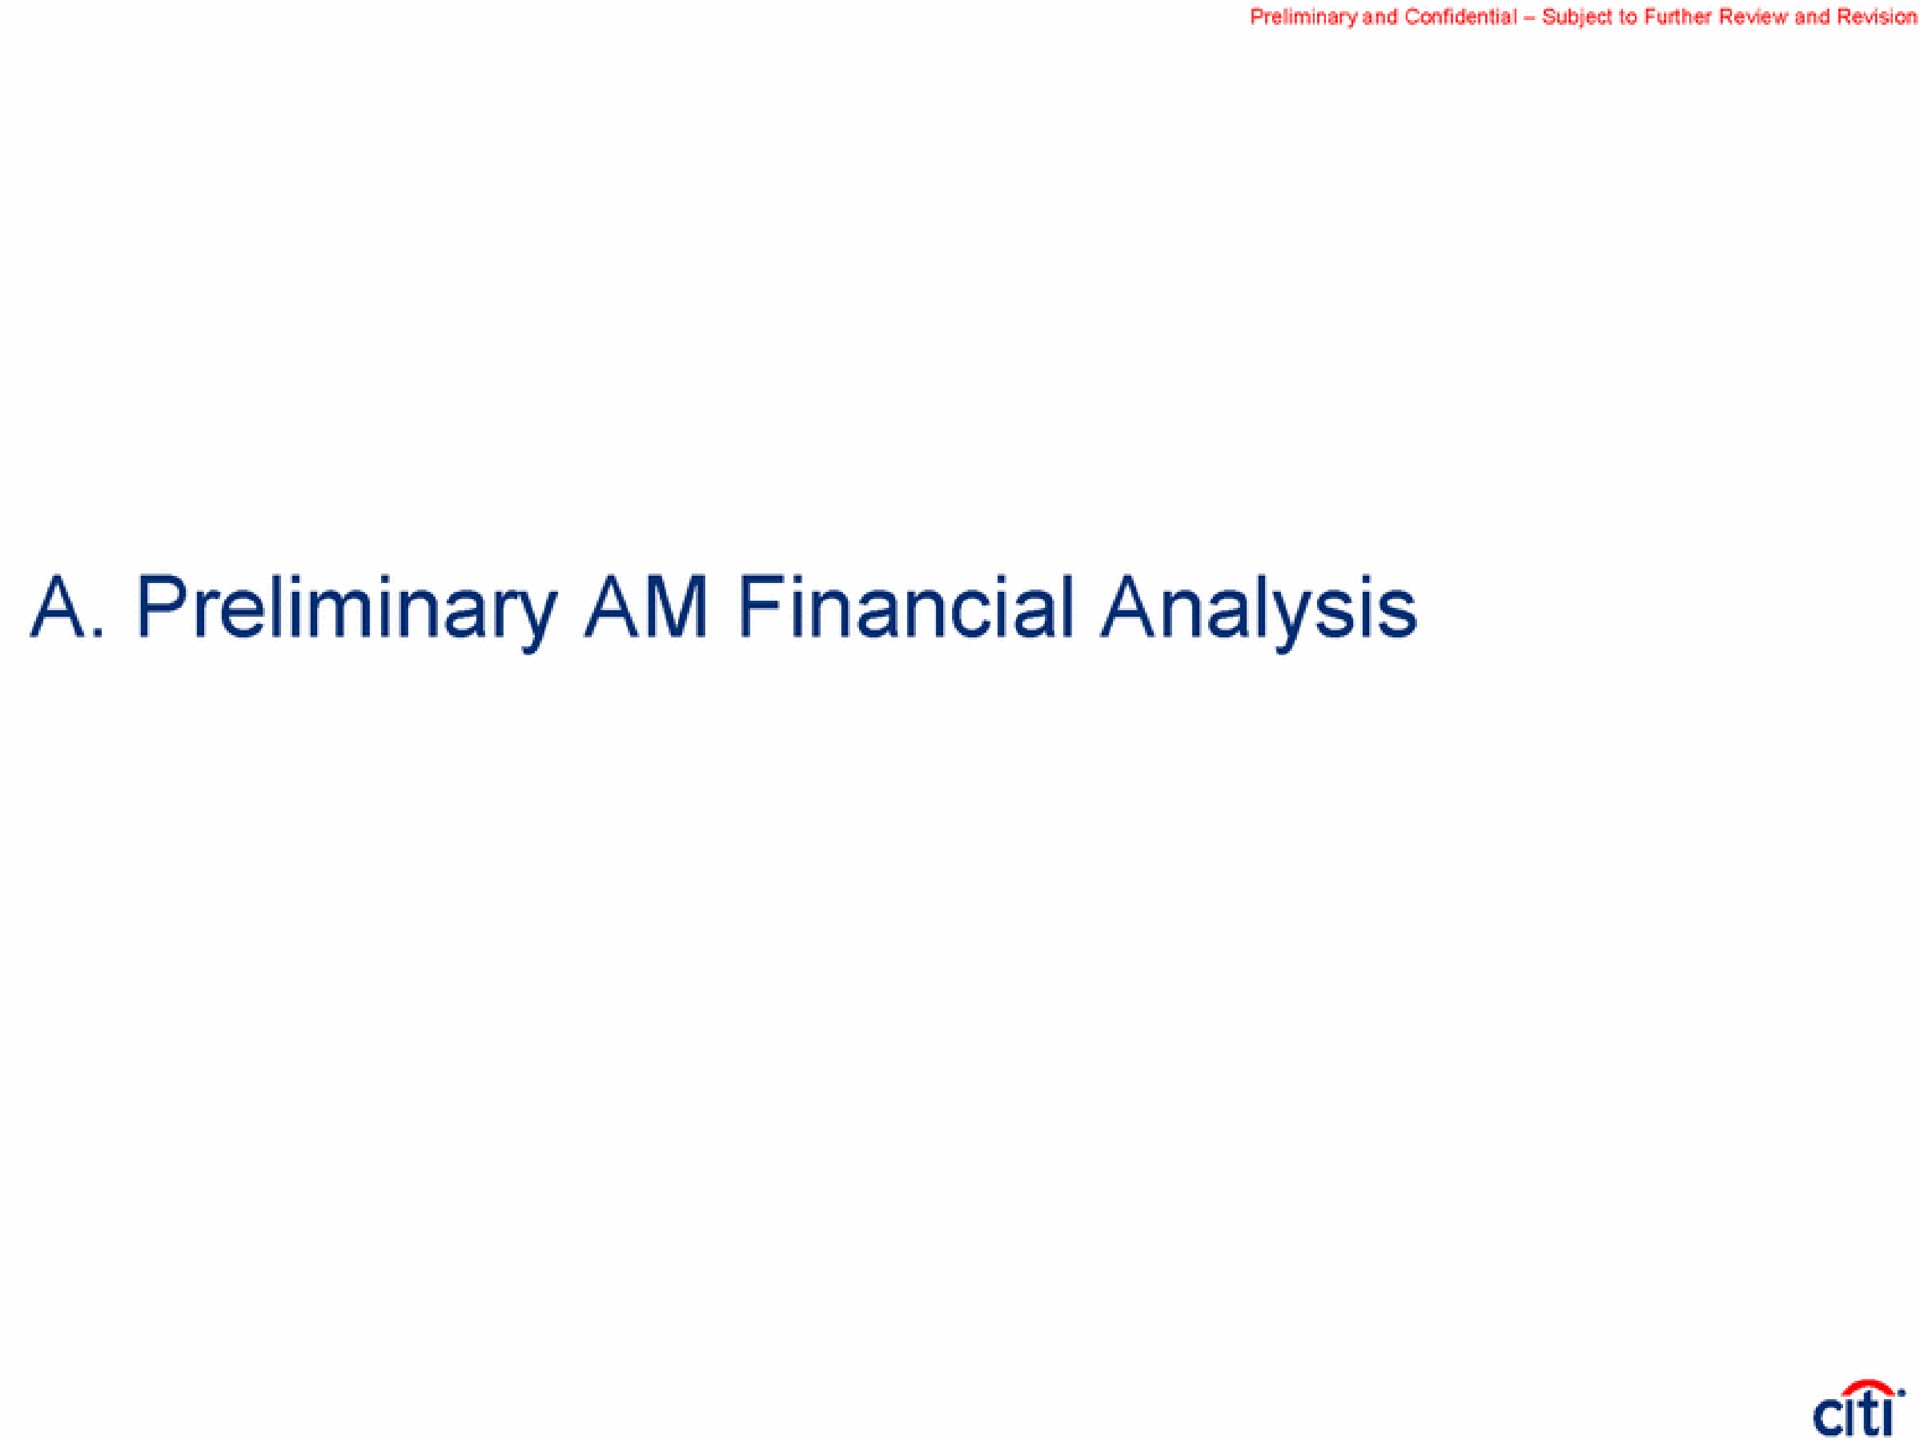 a preliminary am financial analysis | Citi